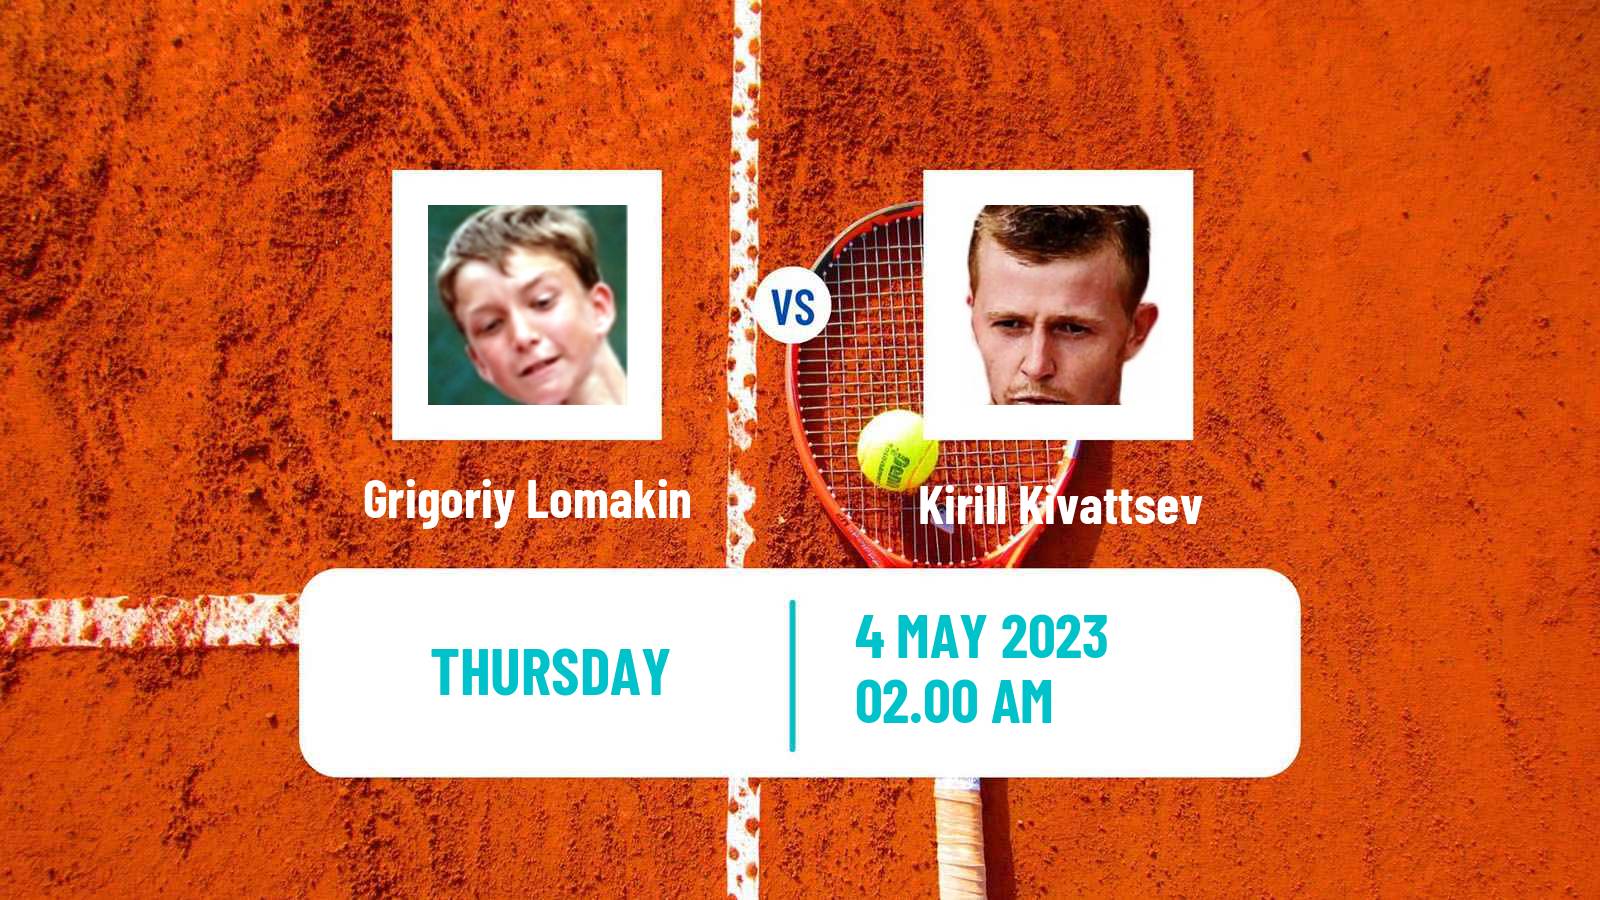 Tennis ITF Tournaments Grigoriy Lomakin - Kirill Kivattsev